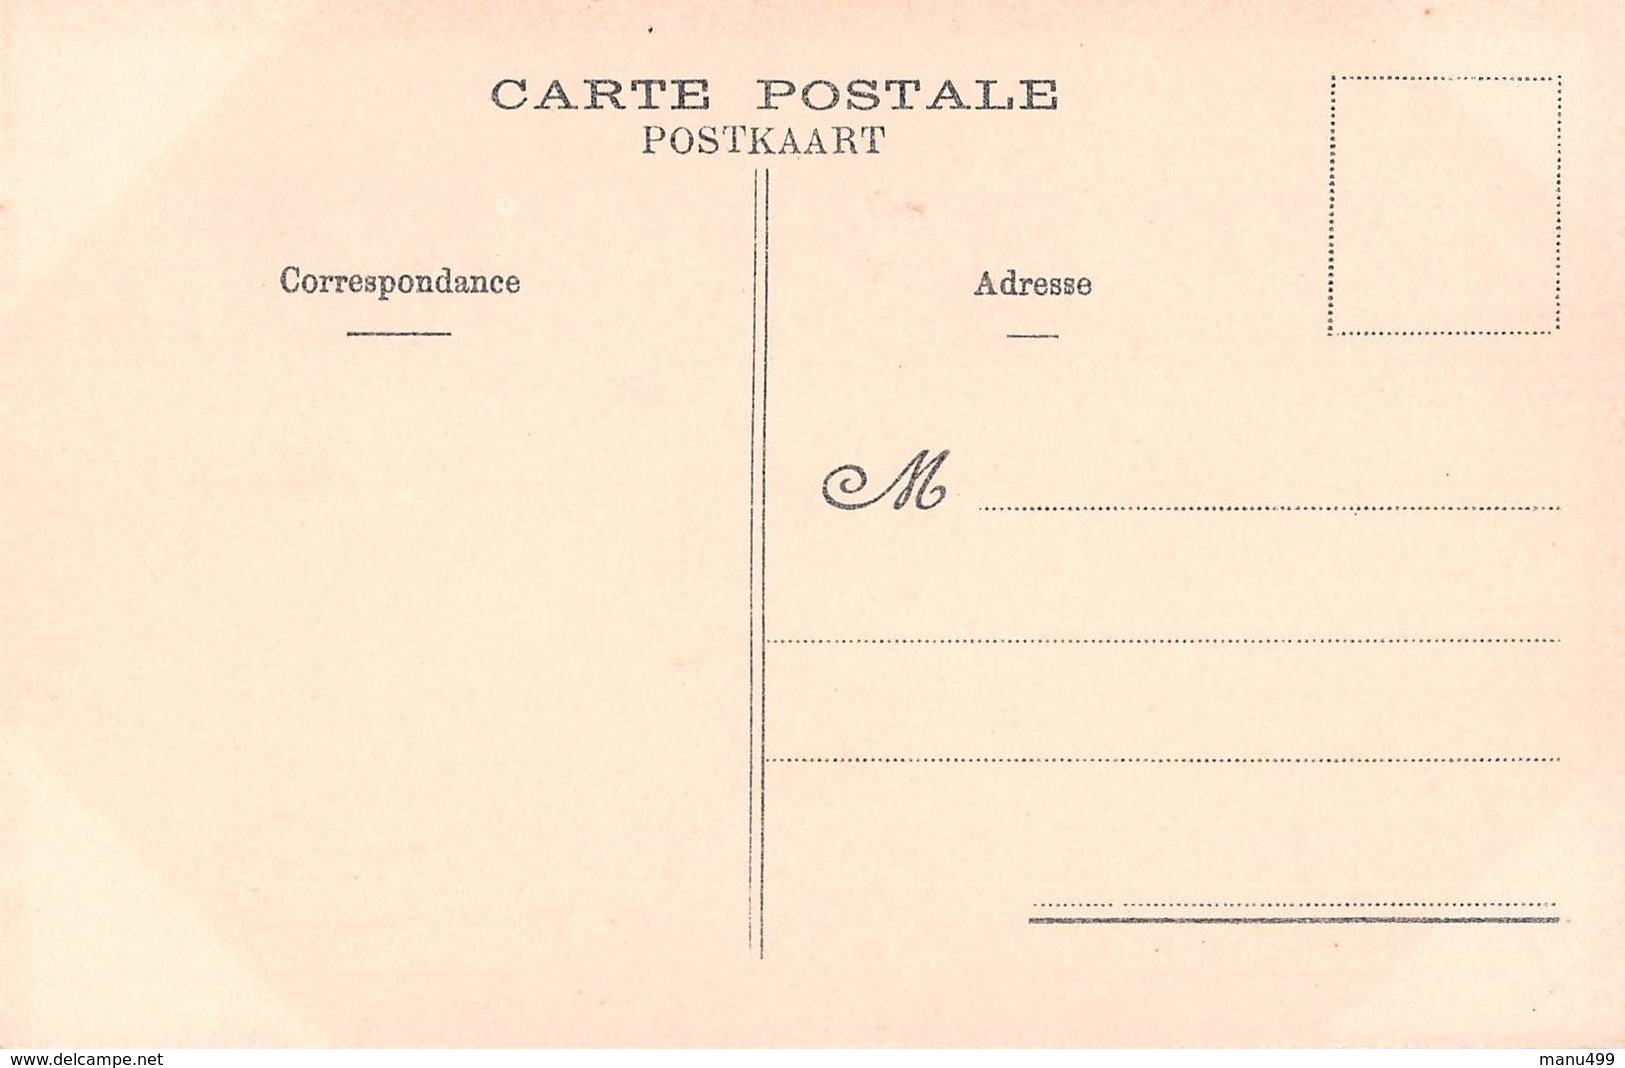 Tournai - [lot] 19 Cartes Sur Cortège Et Tournoi De Chevalerie 1913 - Tournai